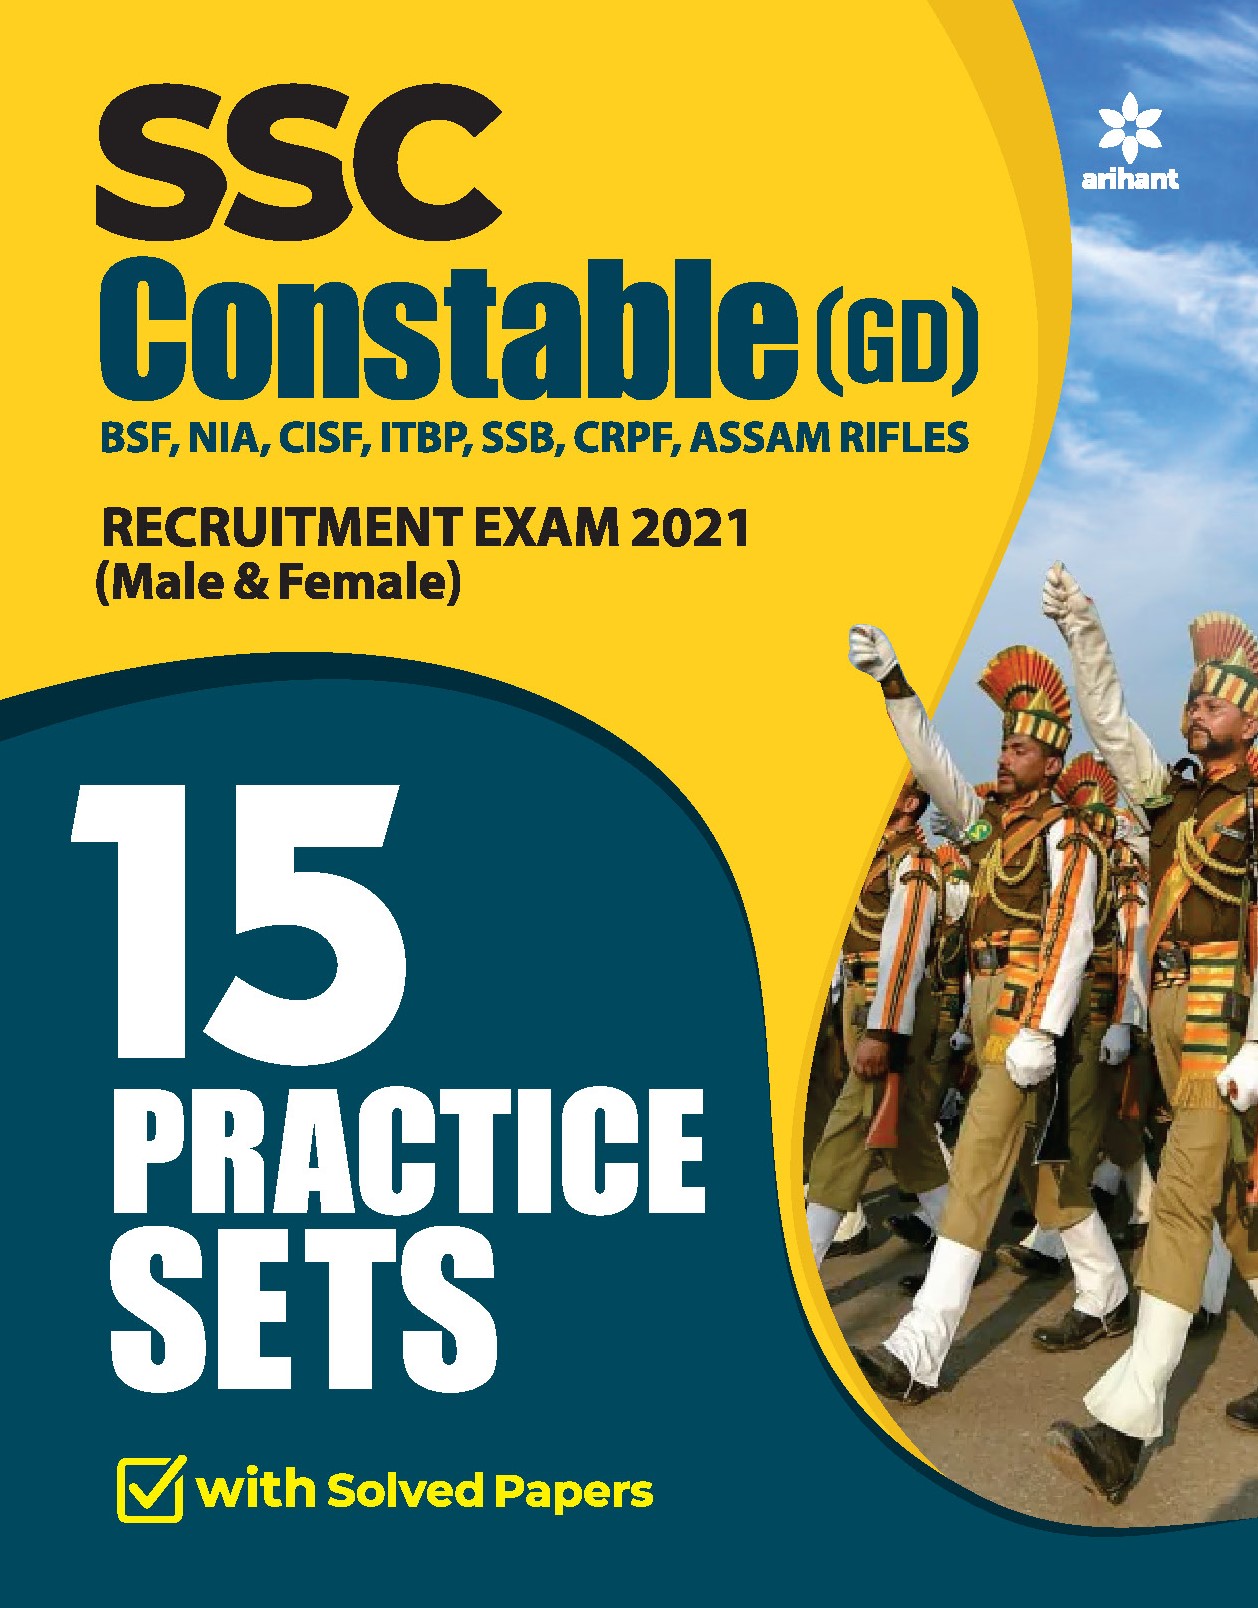 15 Practice Sets SSC Constable GD 2021